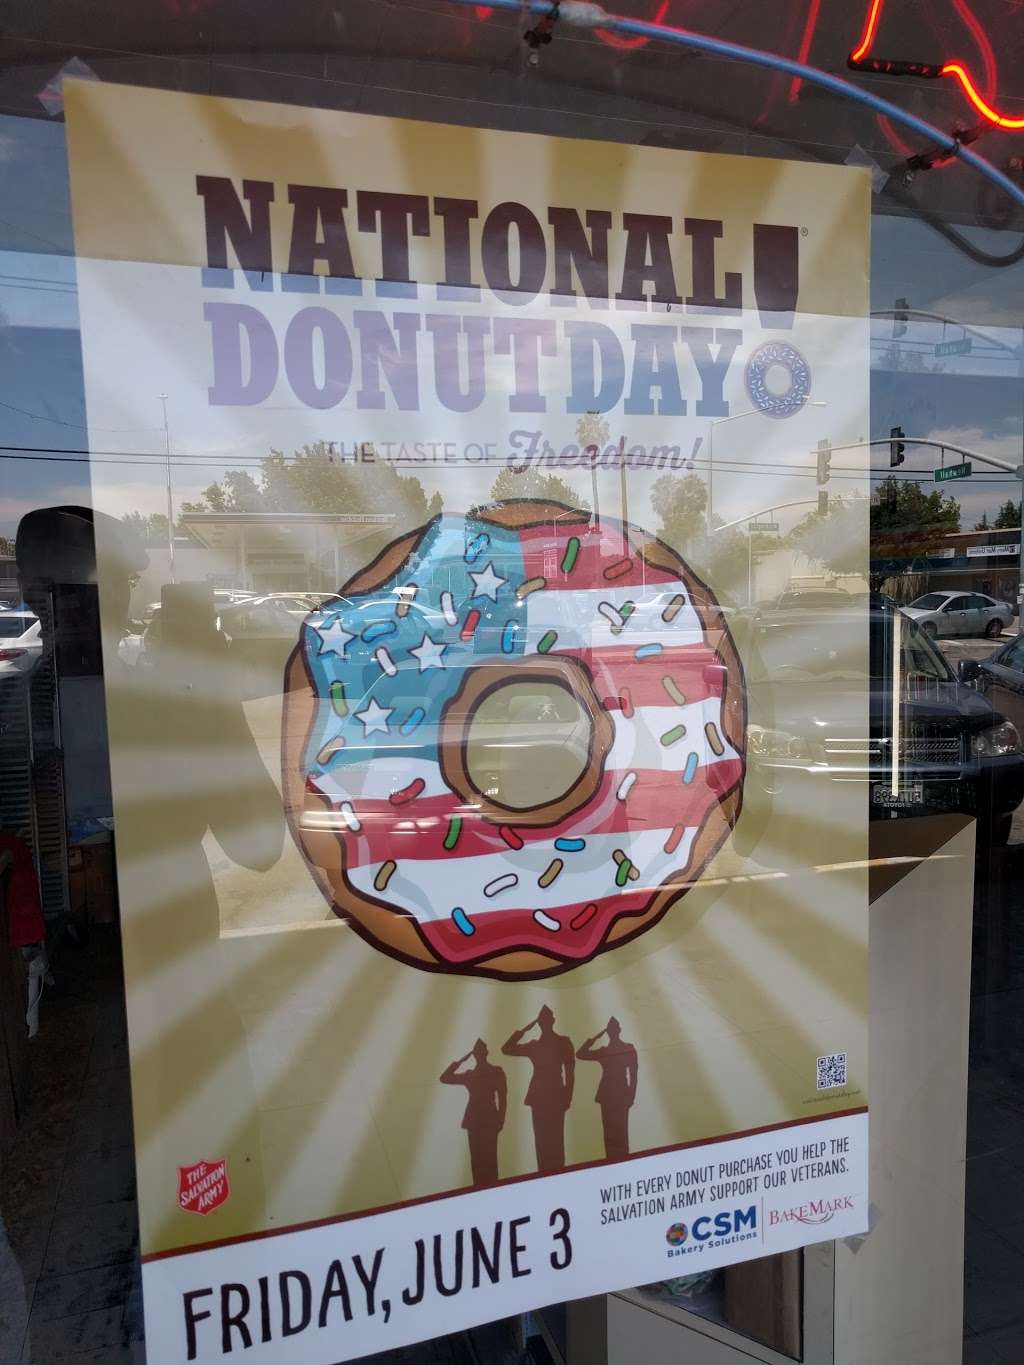 Best Donuts | 24 Washington St, Santa Clara, CA 95050, USA